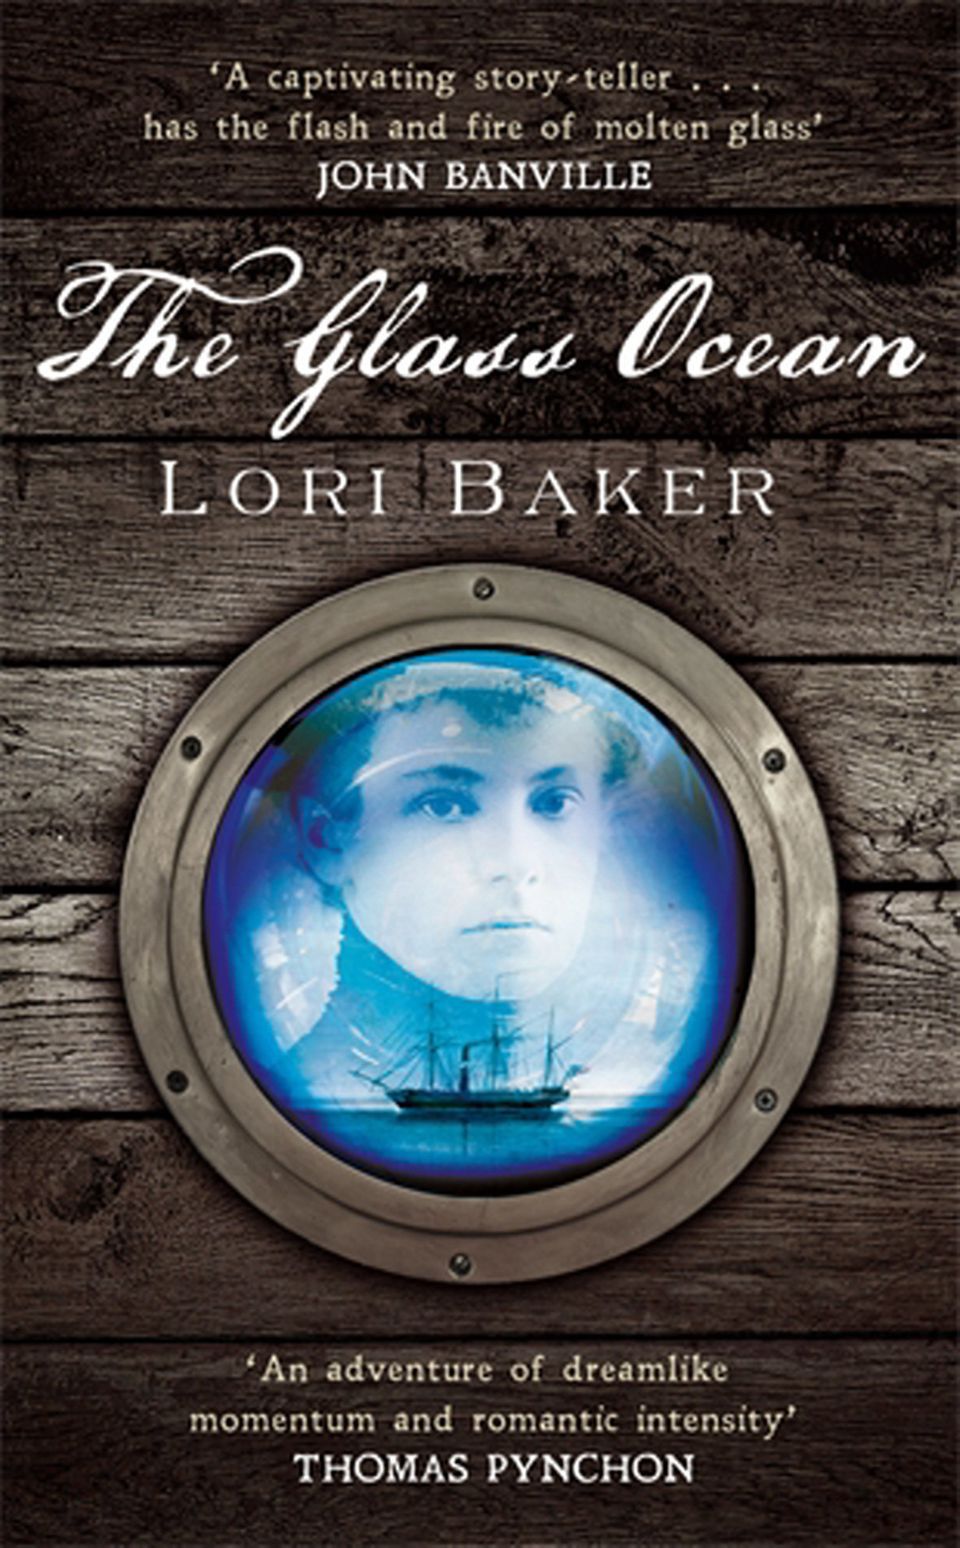 The Glass Ocean by Lori Baker (Penguin) 